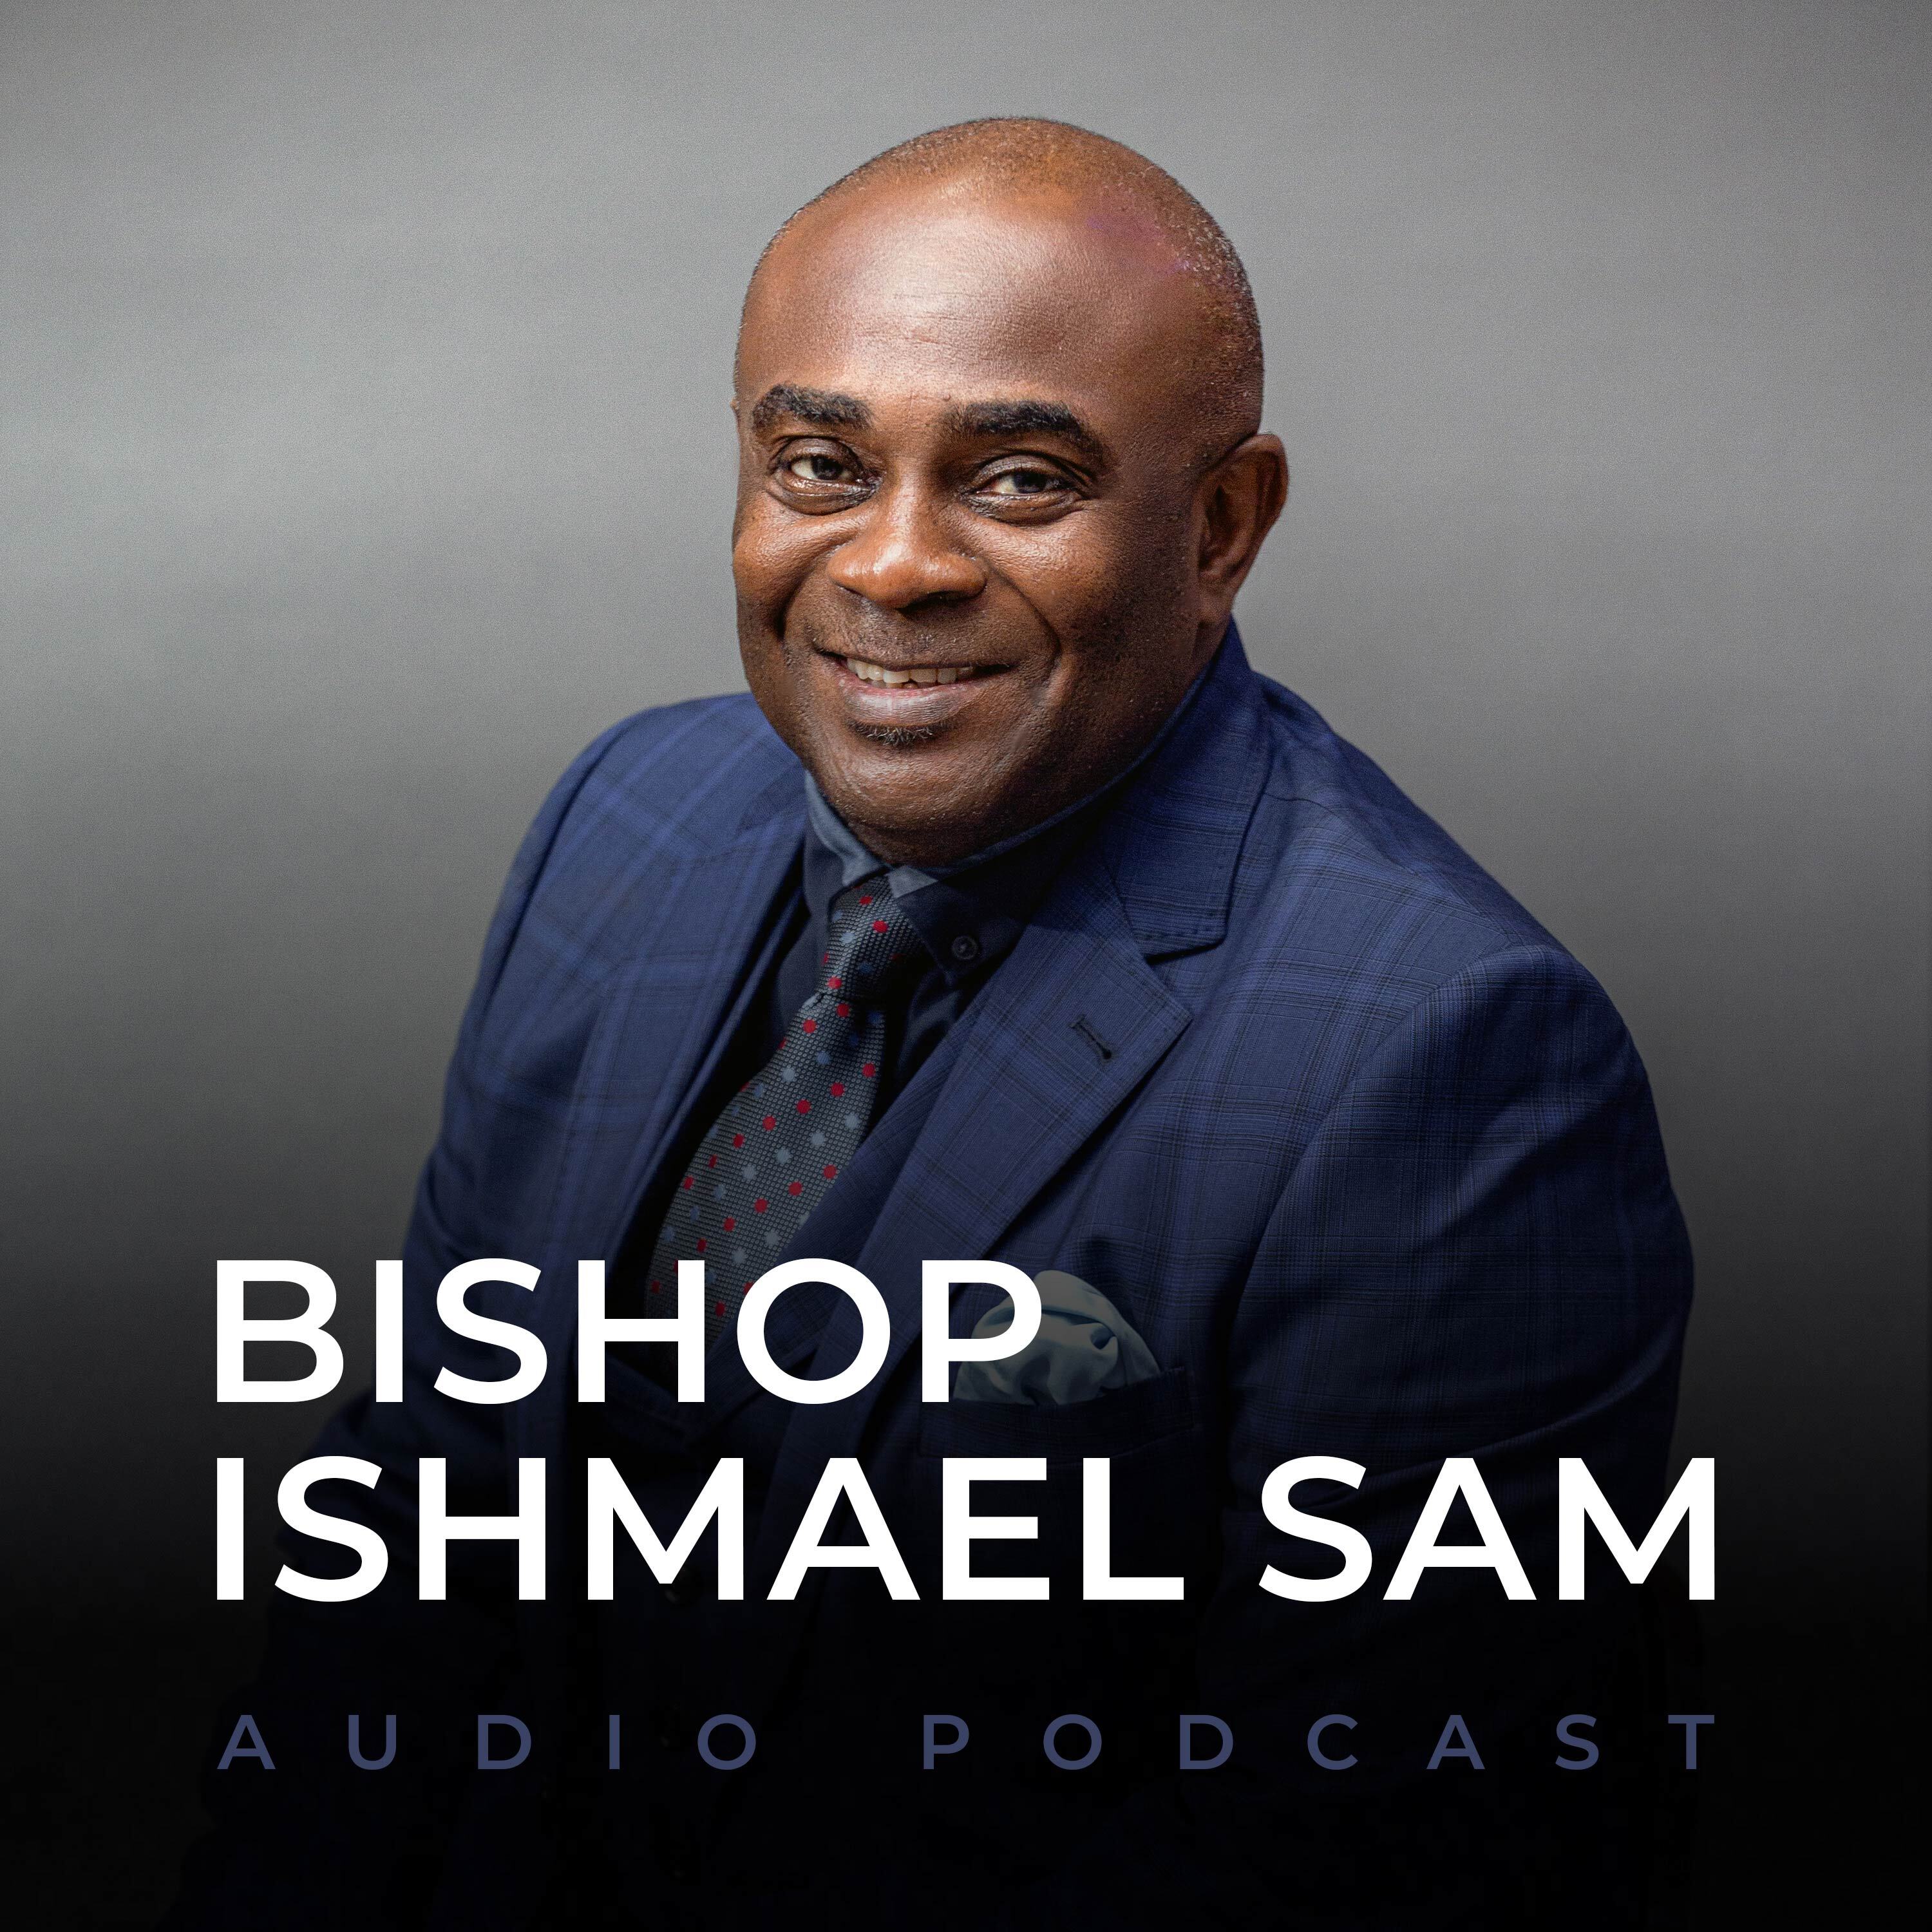 Bishop Ishmael Sam Audio Podcast